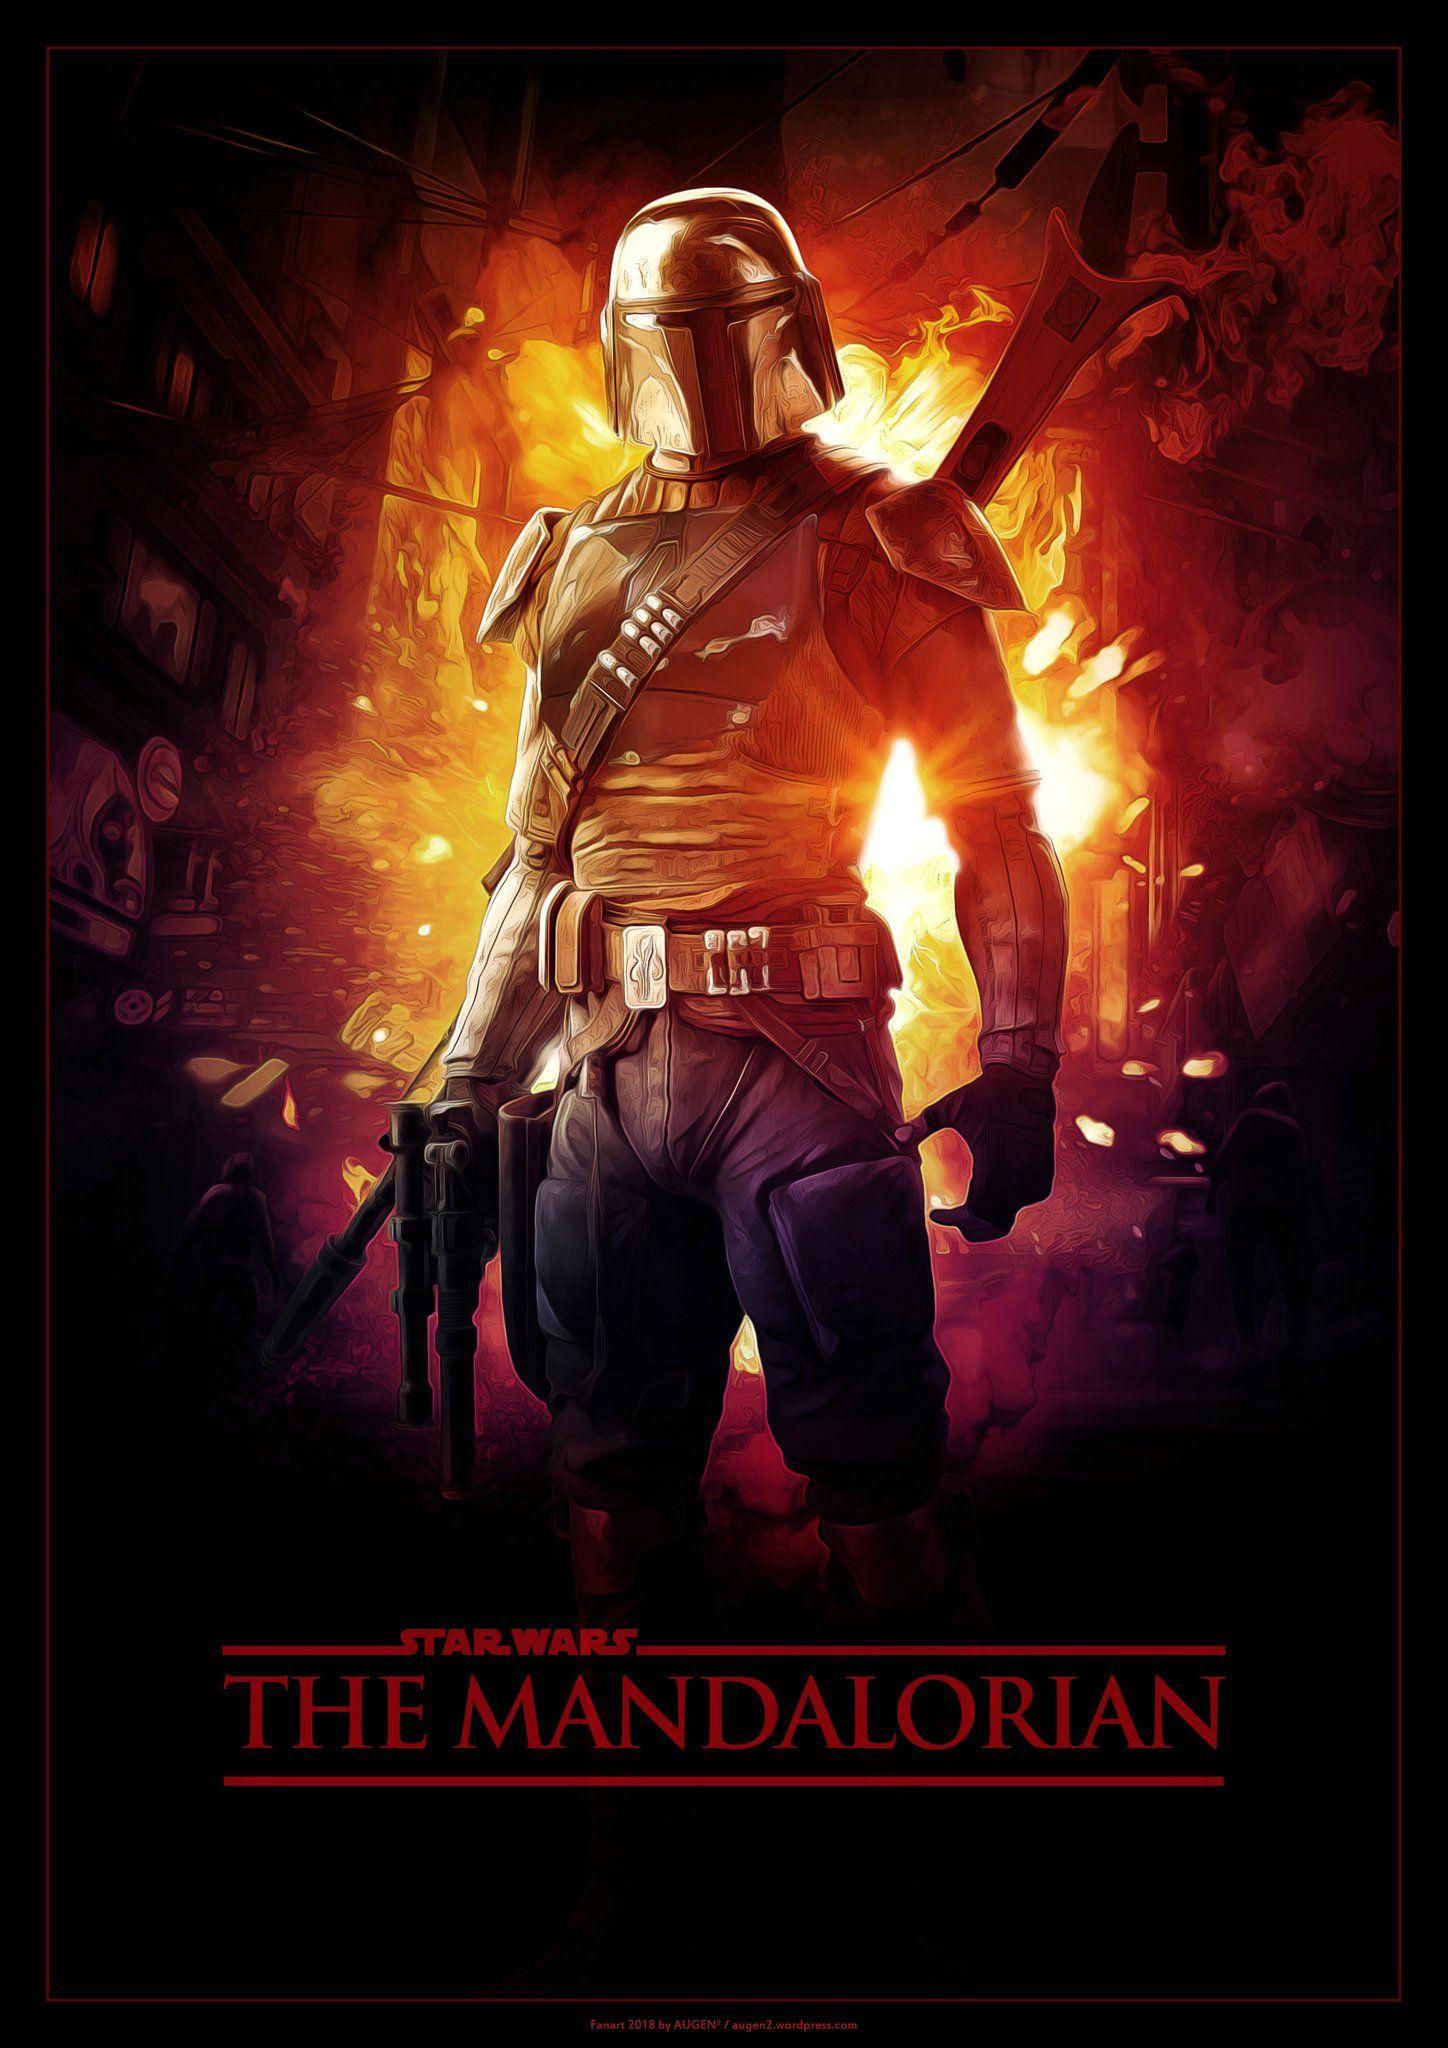 The Mandalorian #starwars Art by augen2.wordpress.com. Star Wars